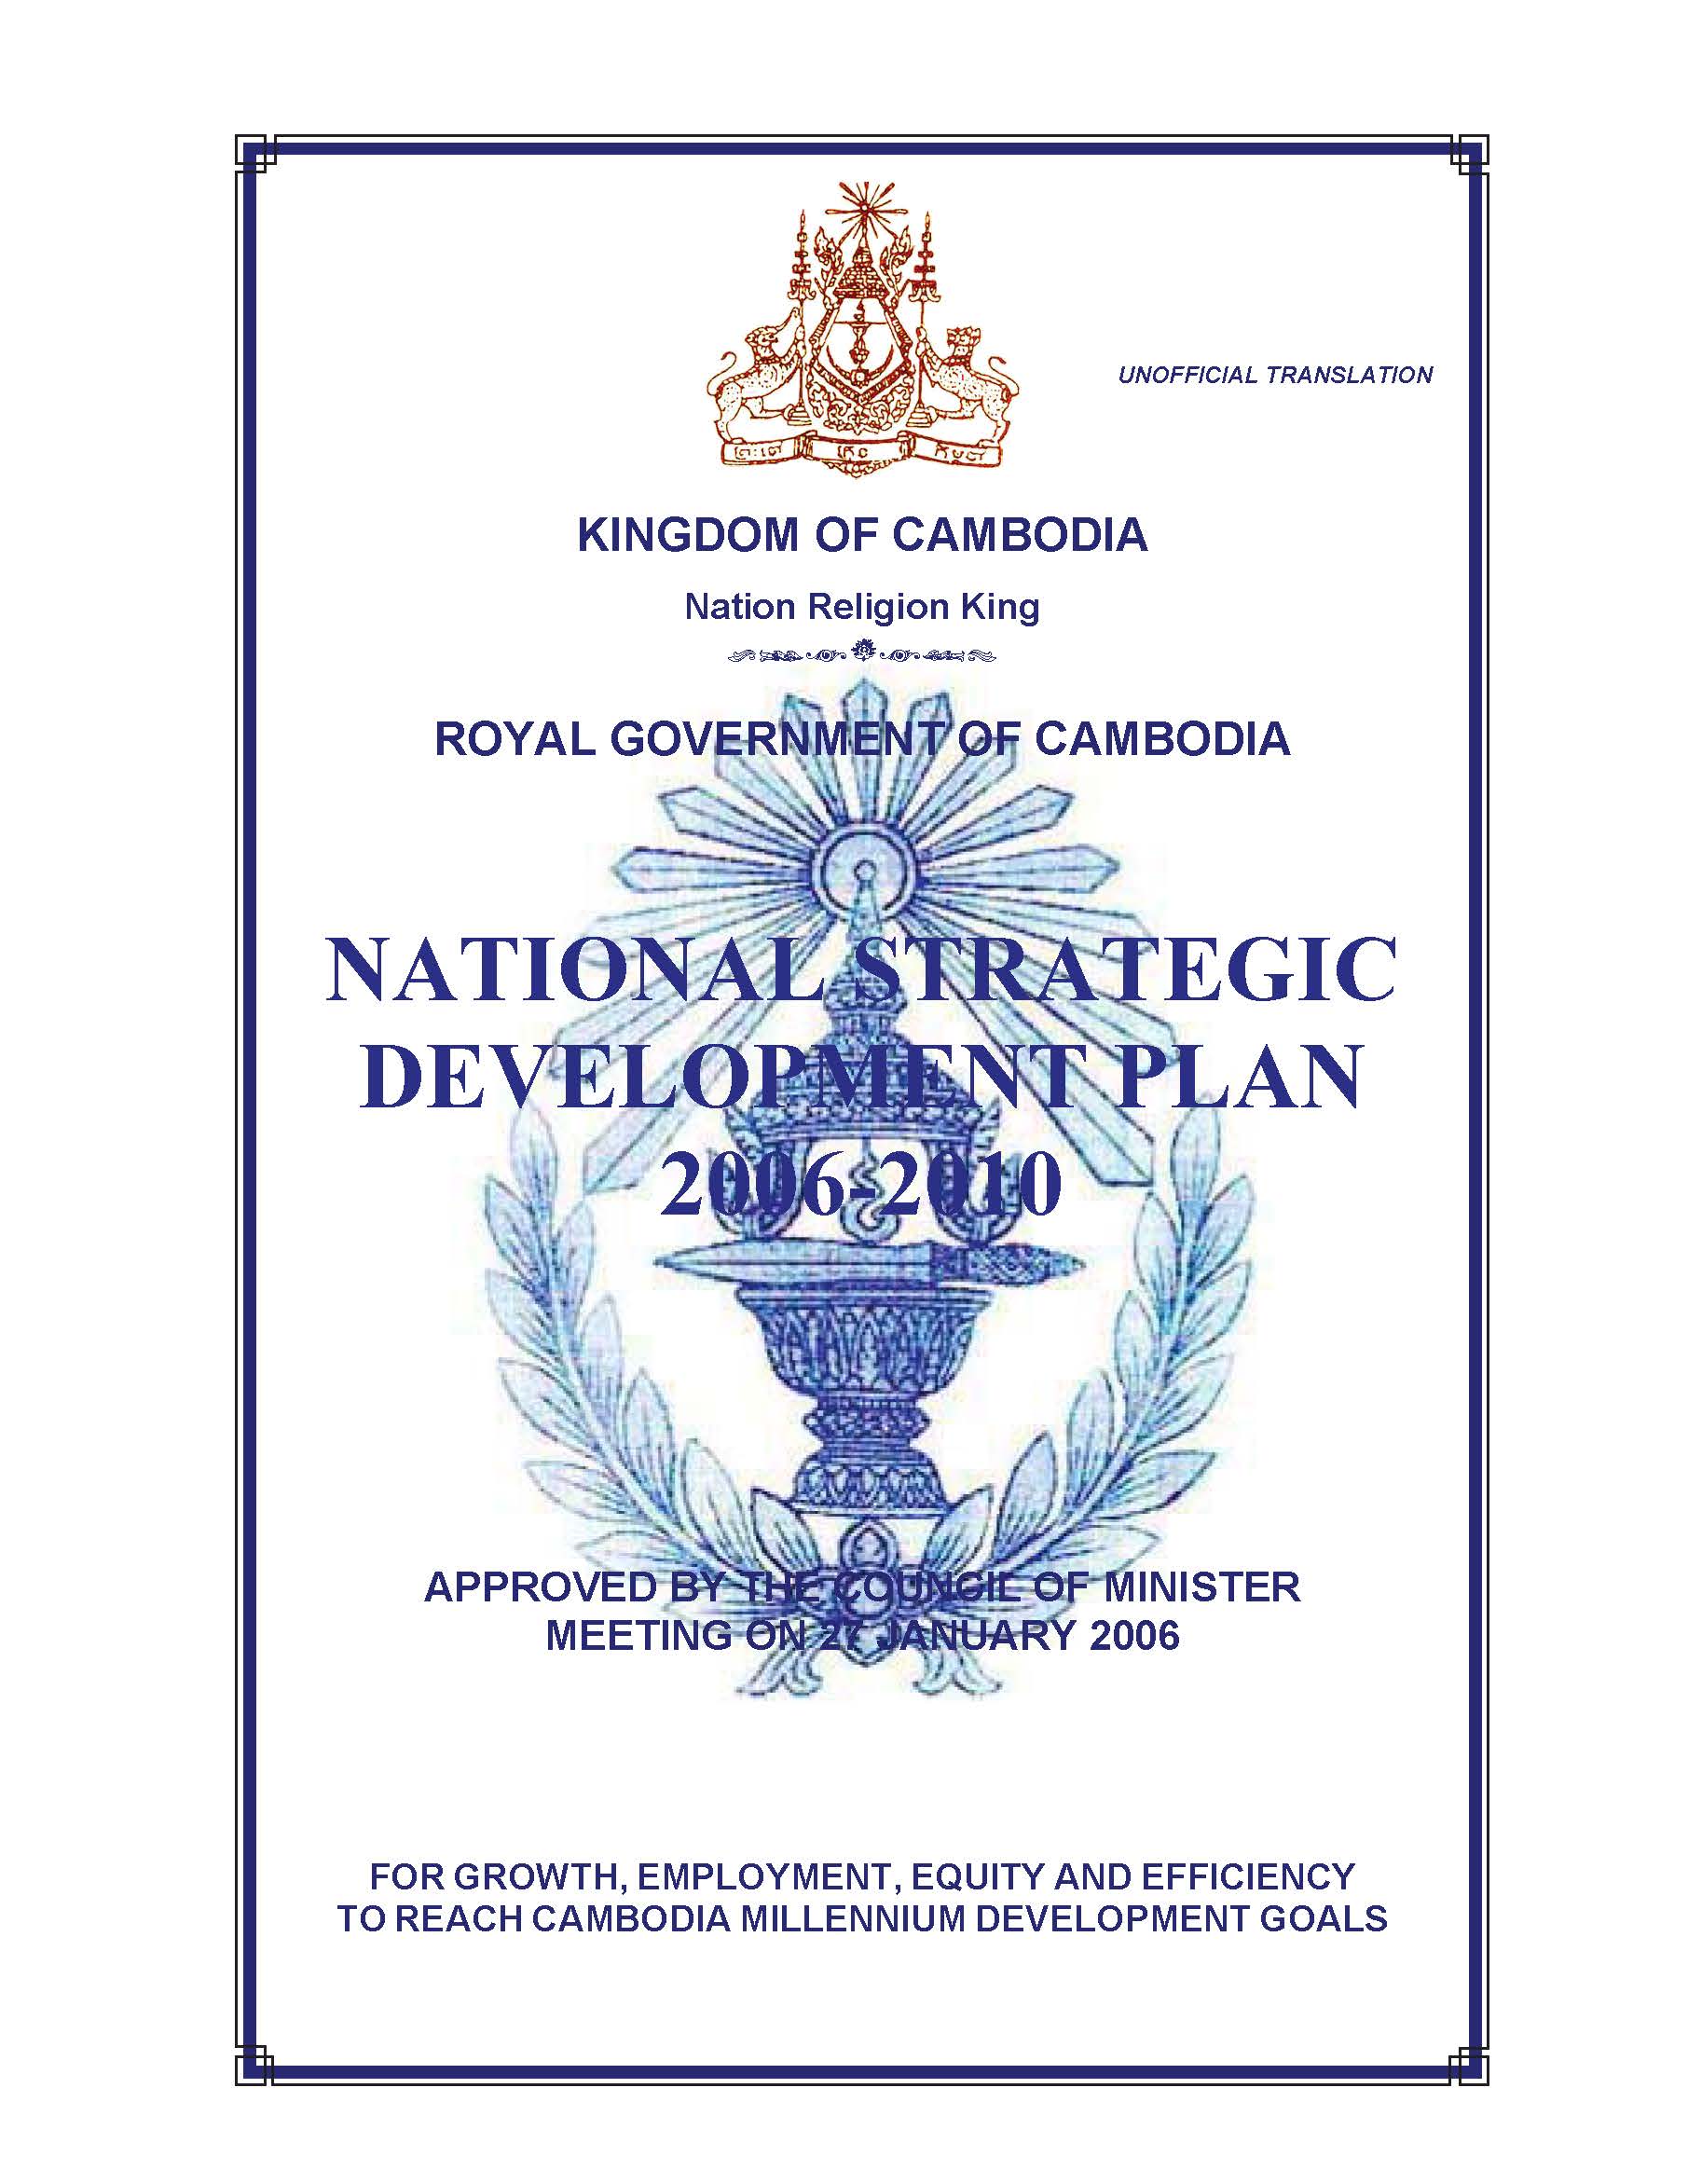 NATIONAL STRATEGIC DEVELOPMENT PLAN 2006-2010